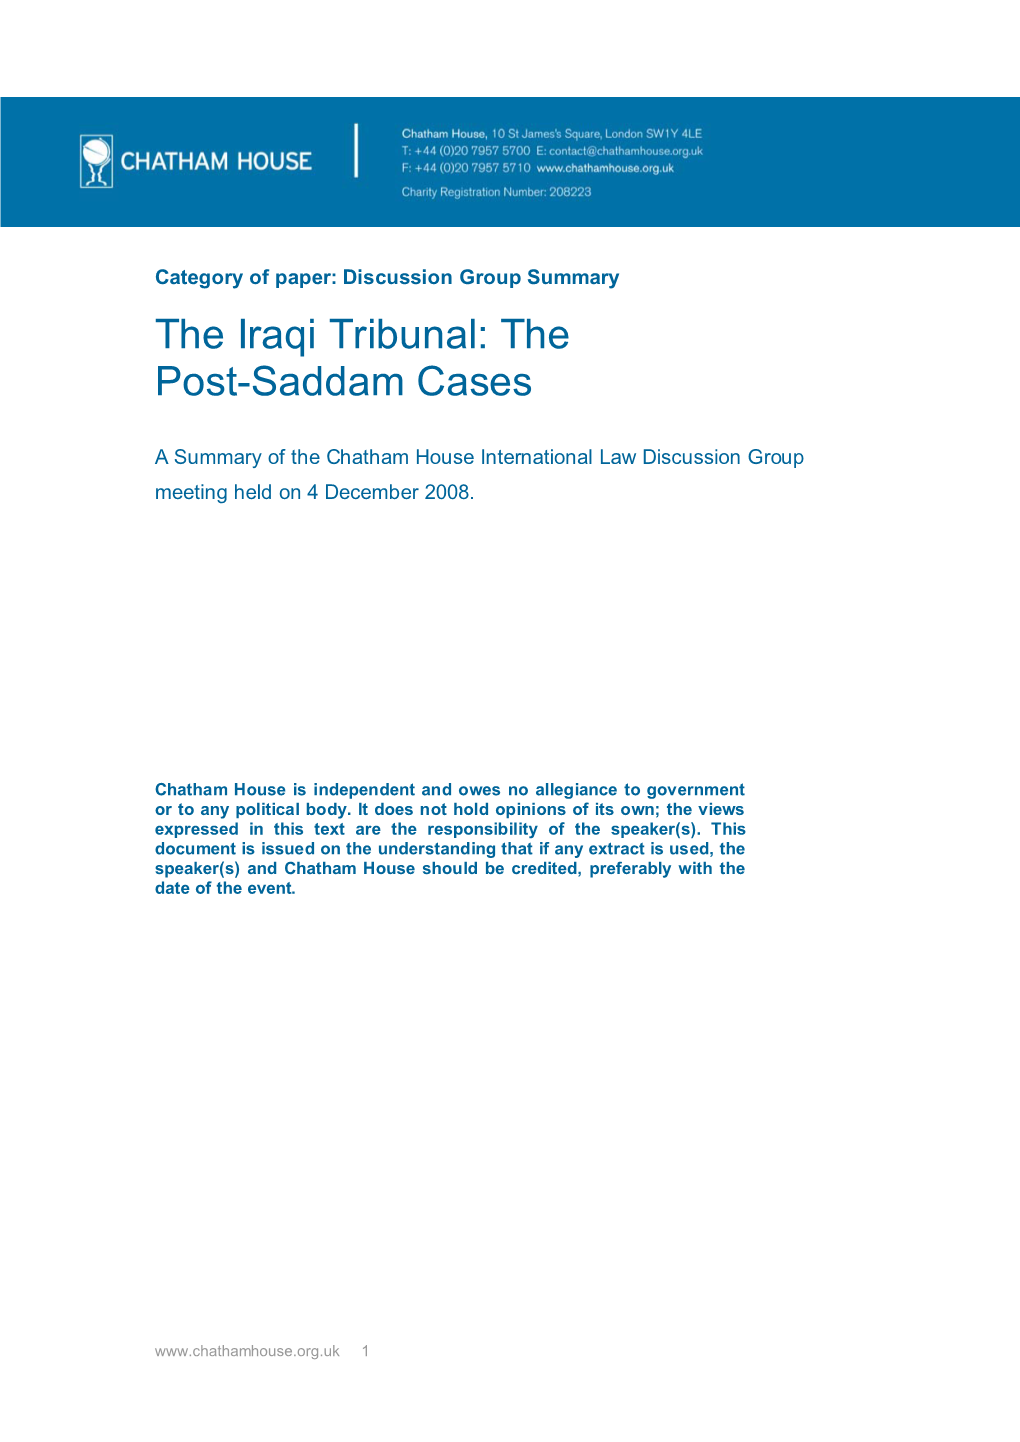 The Iraqi Tribunal: the Post-Saddam Cases